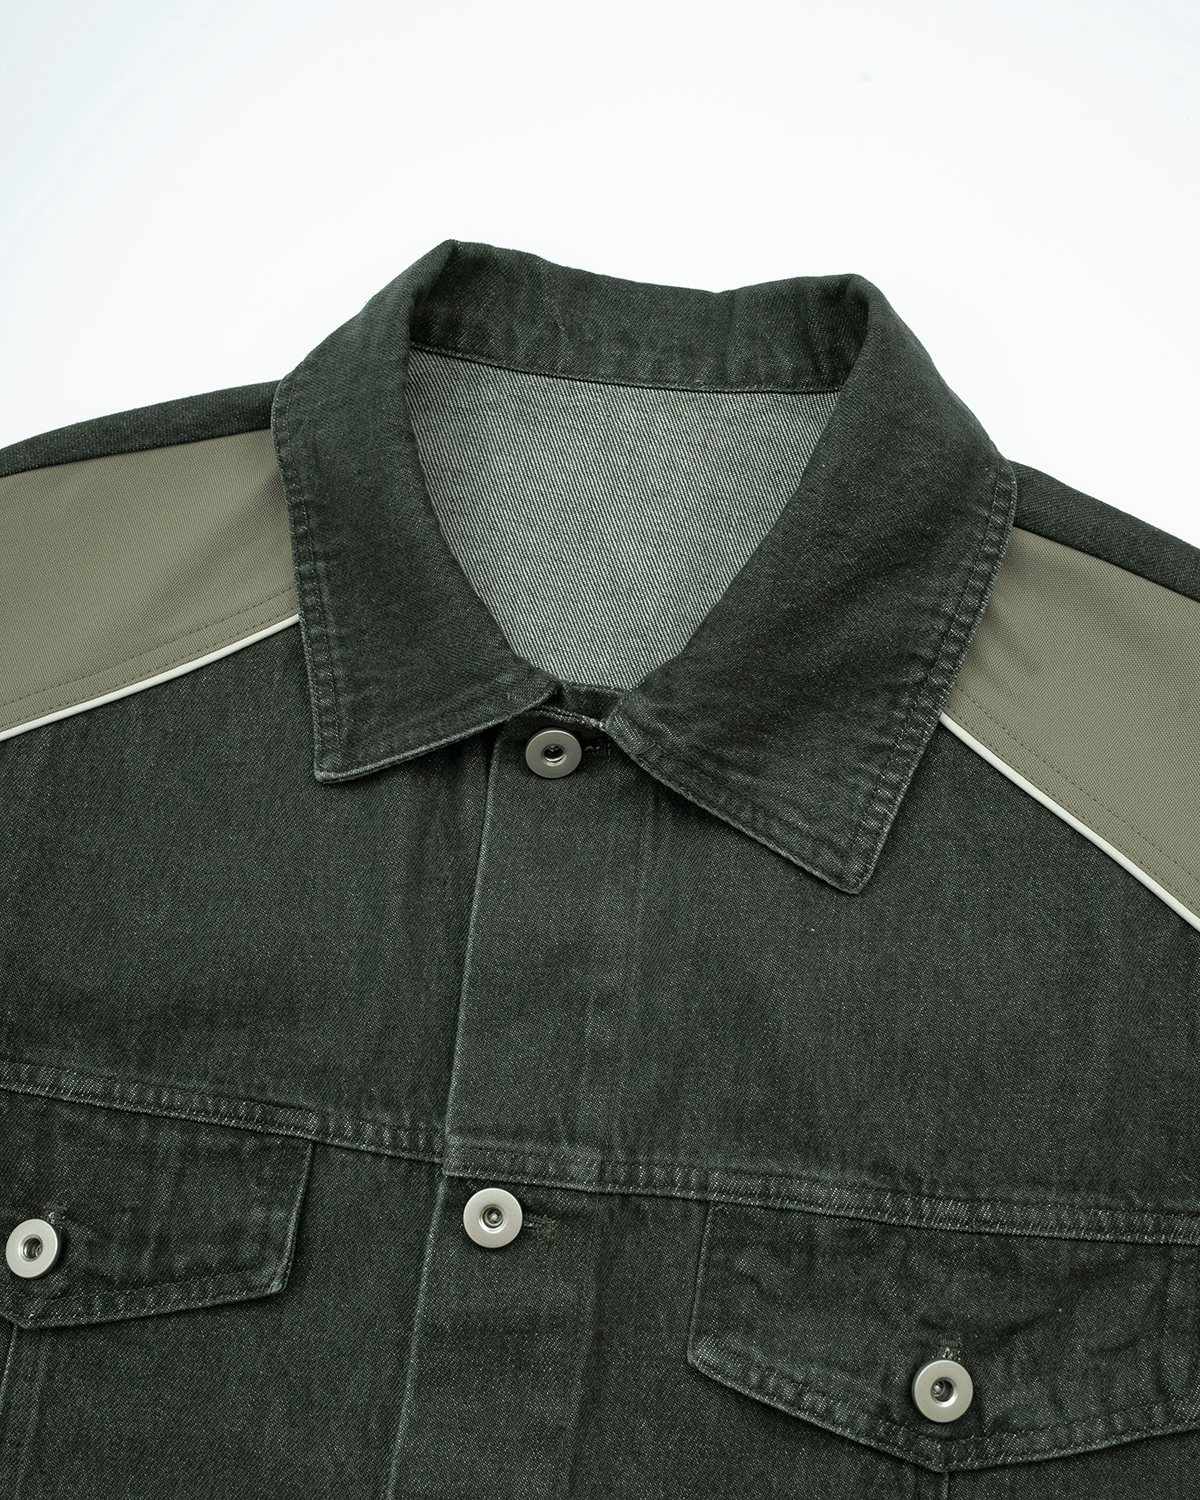 TAKA ORIGINAL LIMITED - Off The Label two-tone denim jacket green